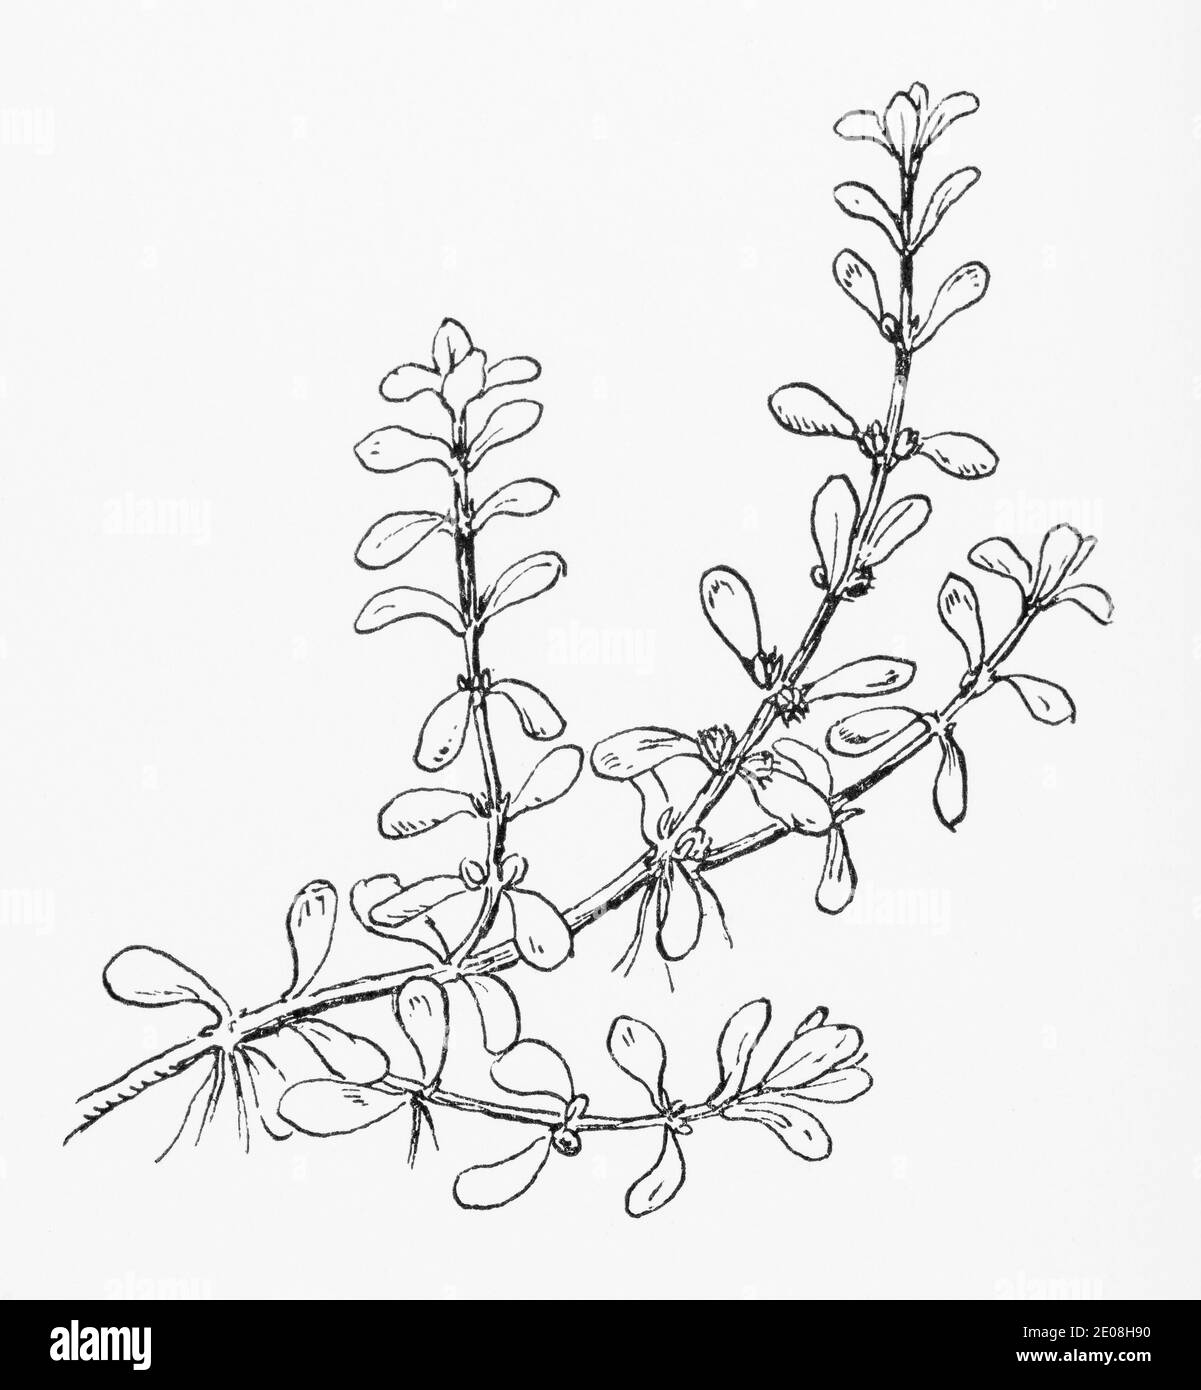 Old botanical illustration engraving of Water Purslane / Lythrum portula, Peplis portula. See Notes Stock Photo